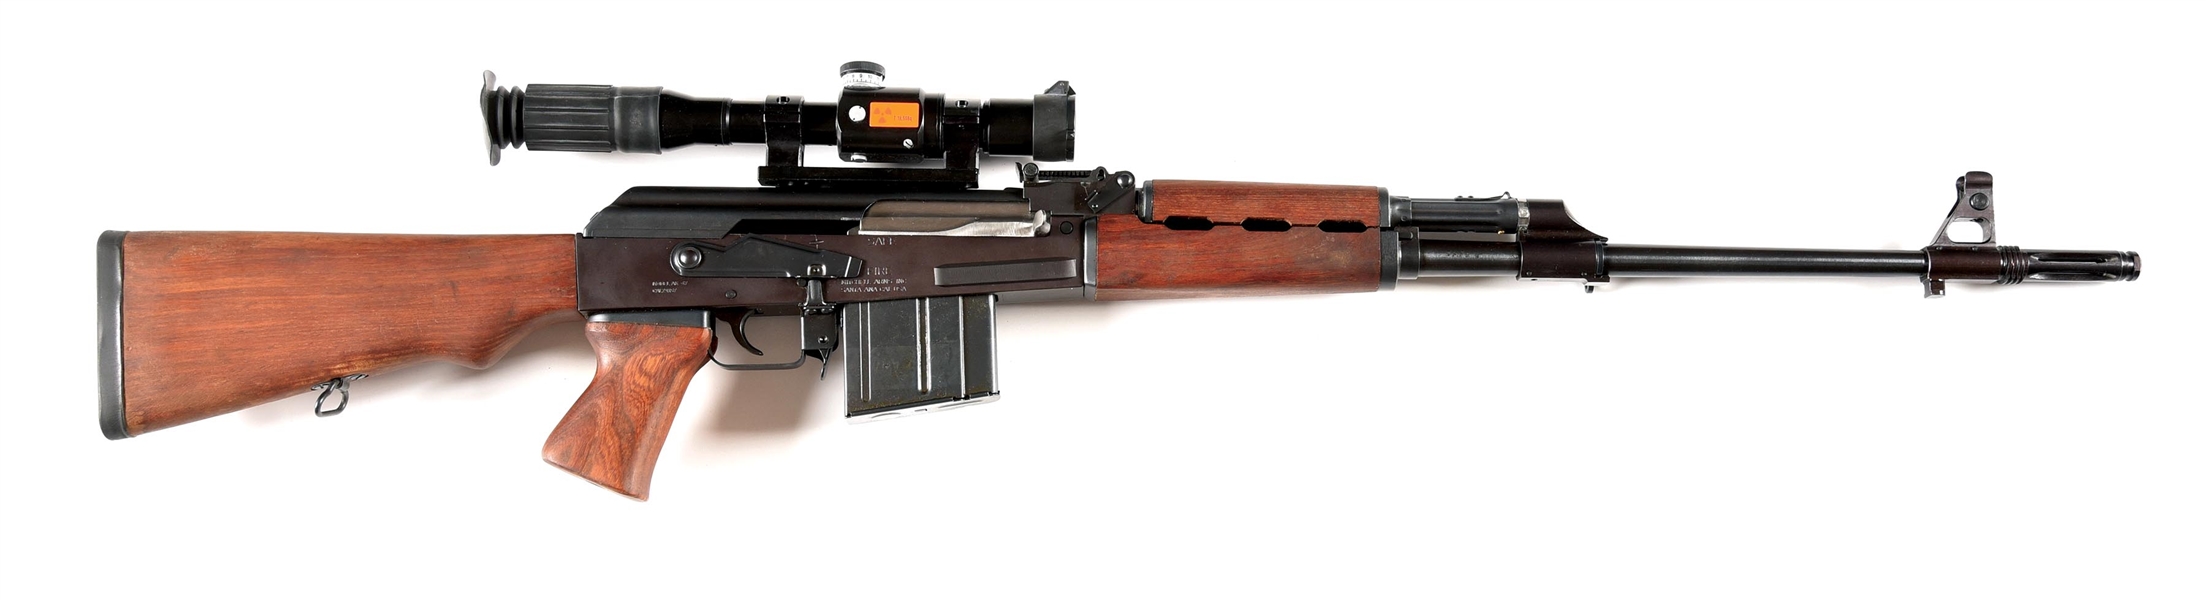 (M) MILLED RECEIVER MITCHELL ARMS ZASTAVA AK-47 (M76) 8MM MAUSER SEMI-AUTOMATIC RIFLE.